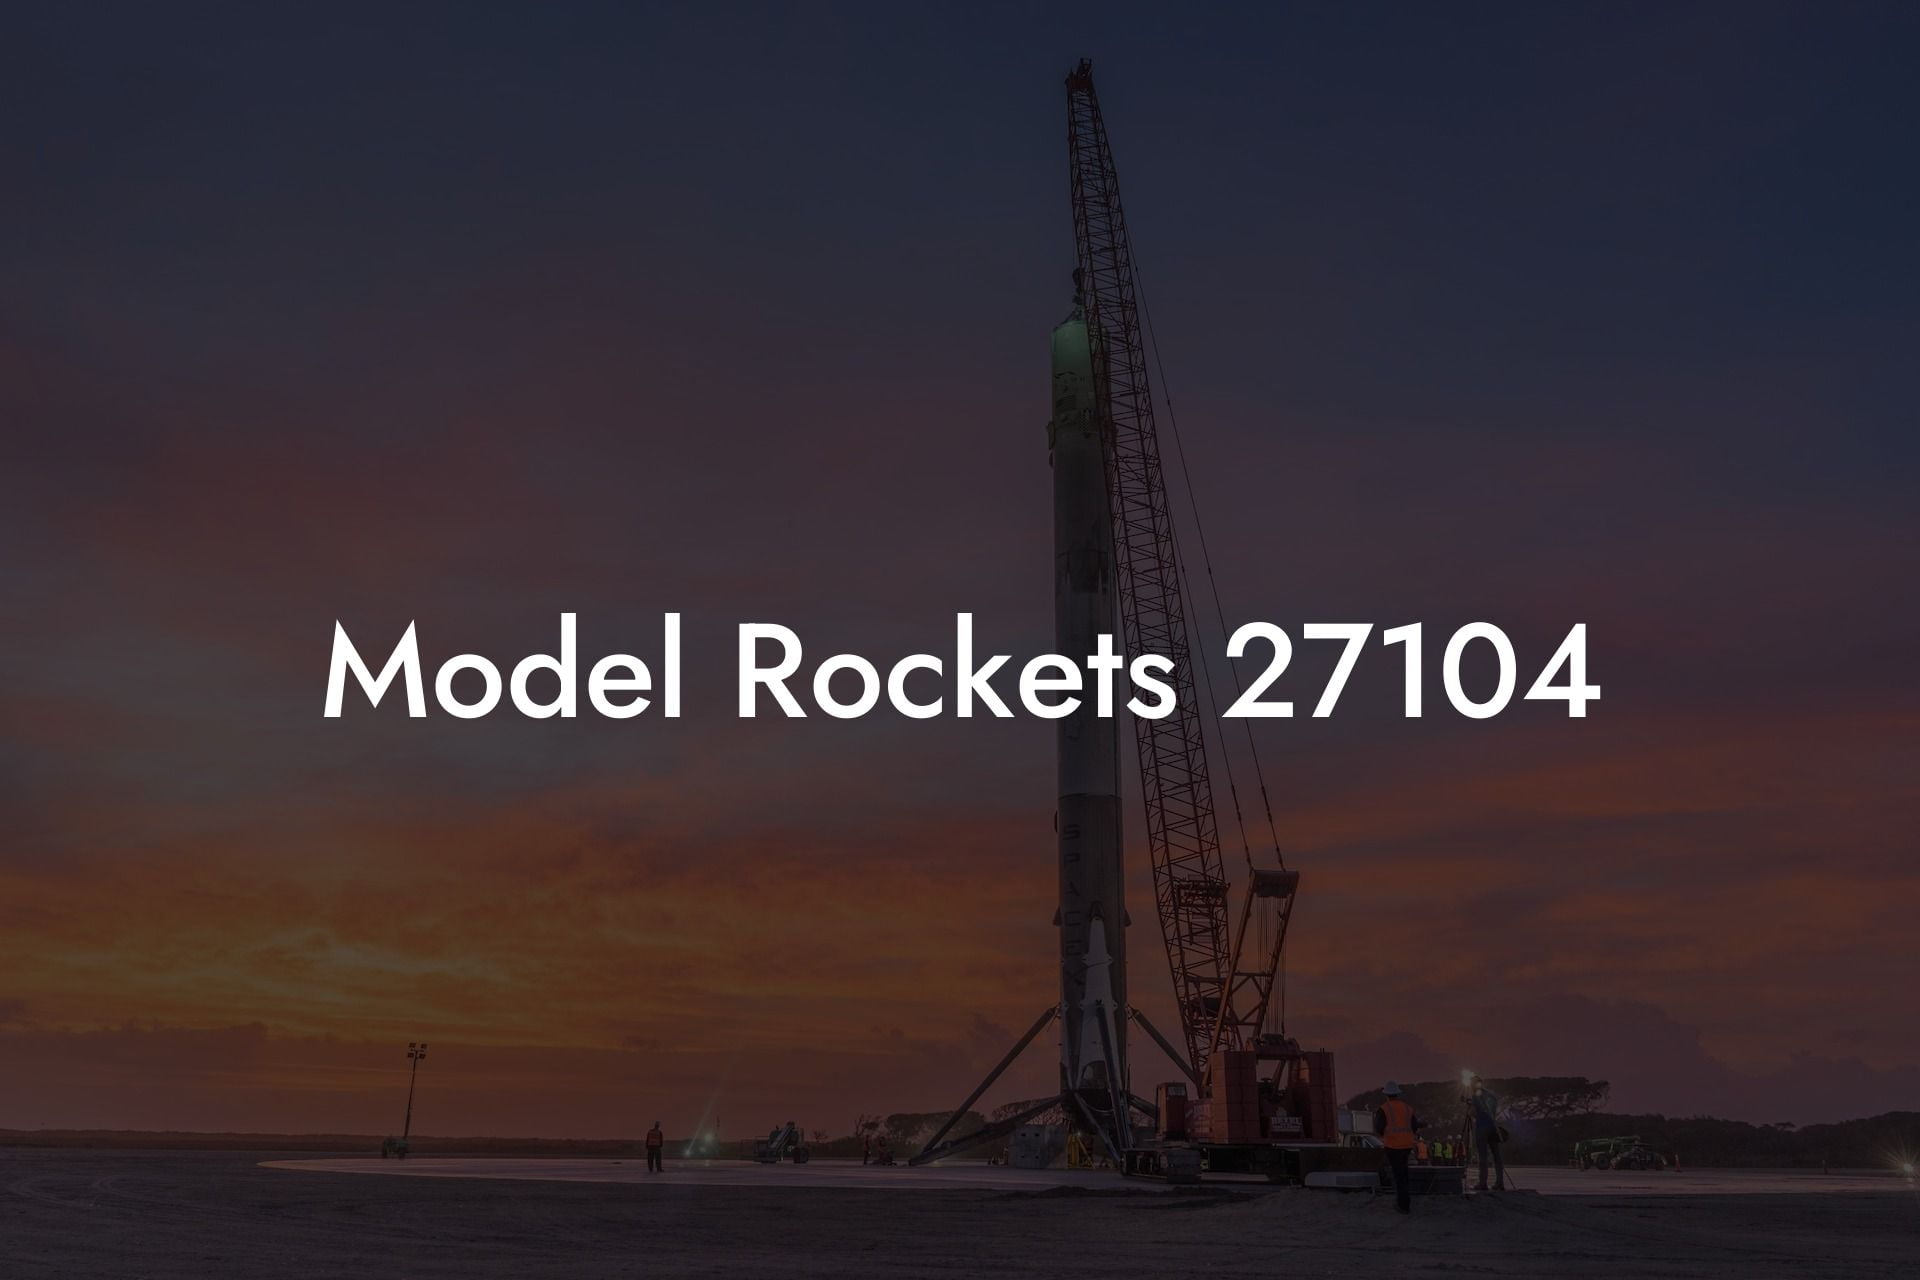 Model Rockets 27104